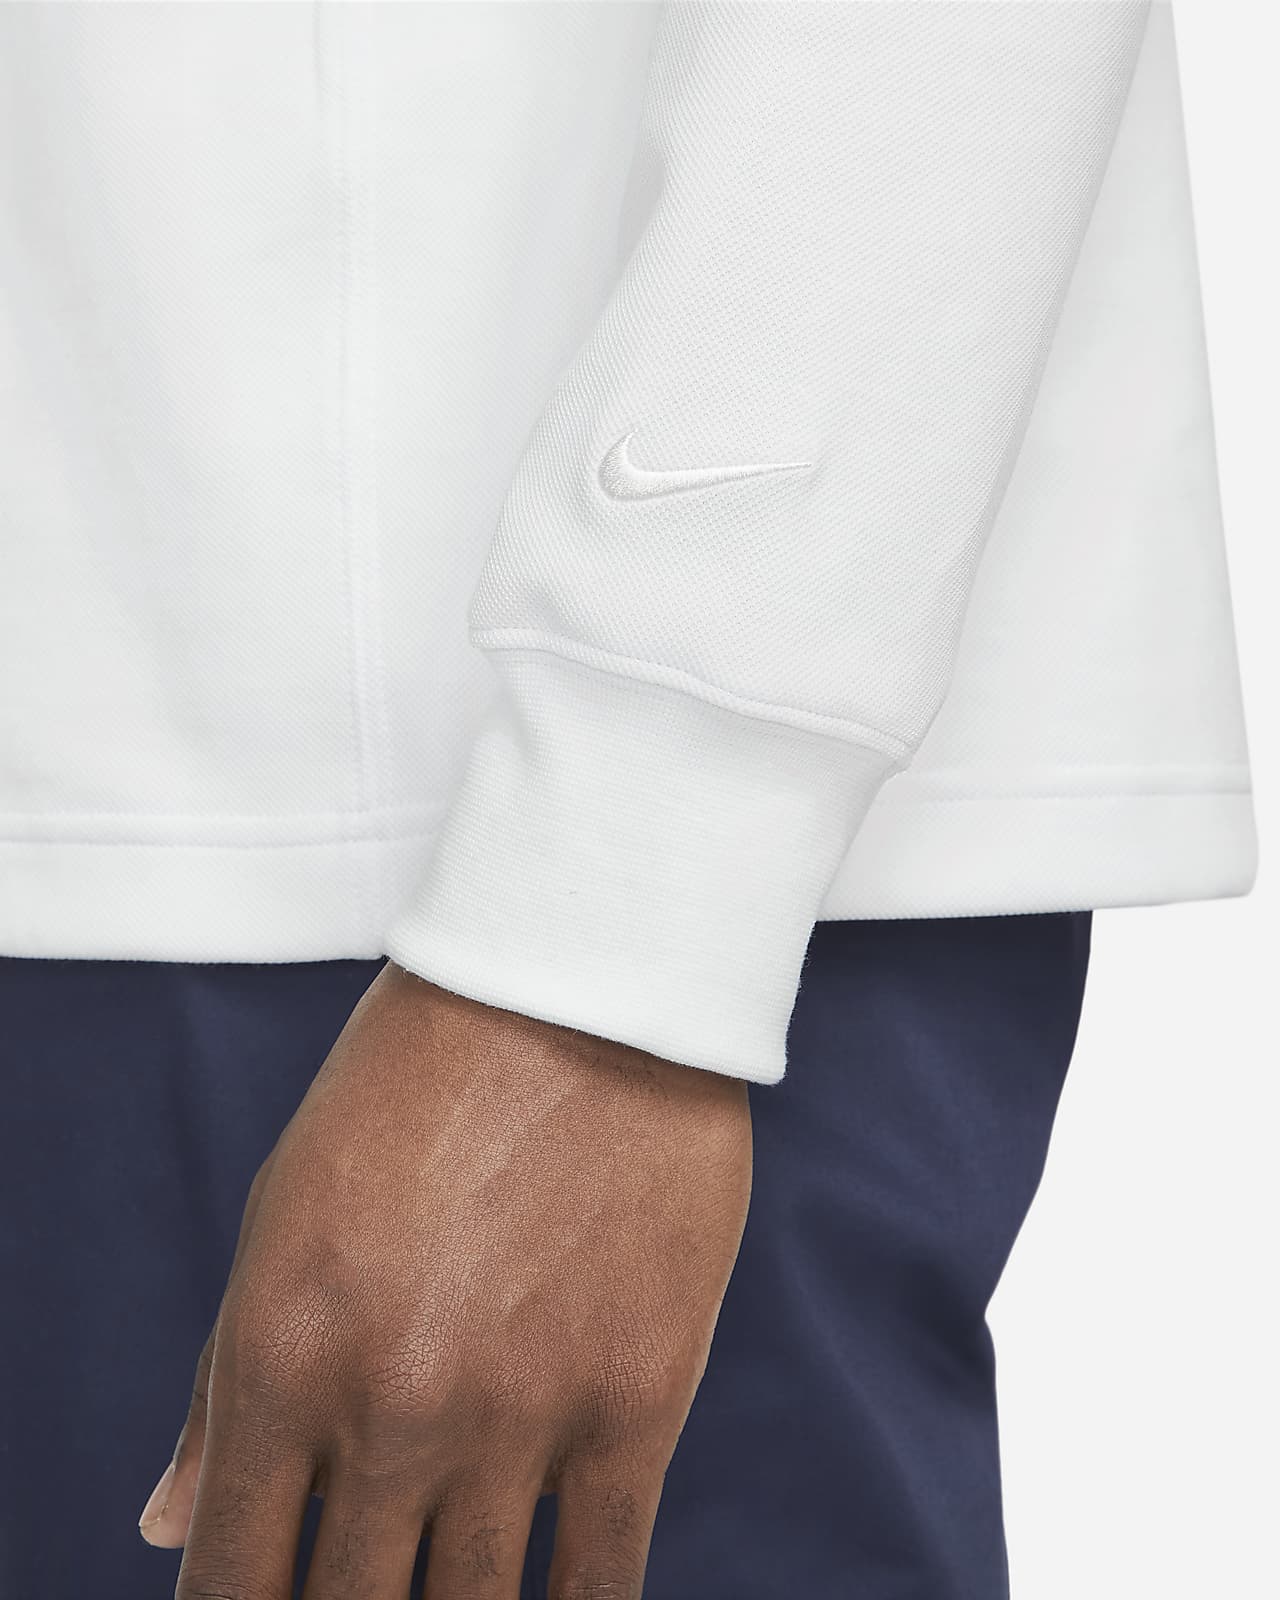 Nike Dri-FIT Men's Long-Sleeve Golf Top